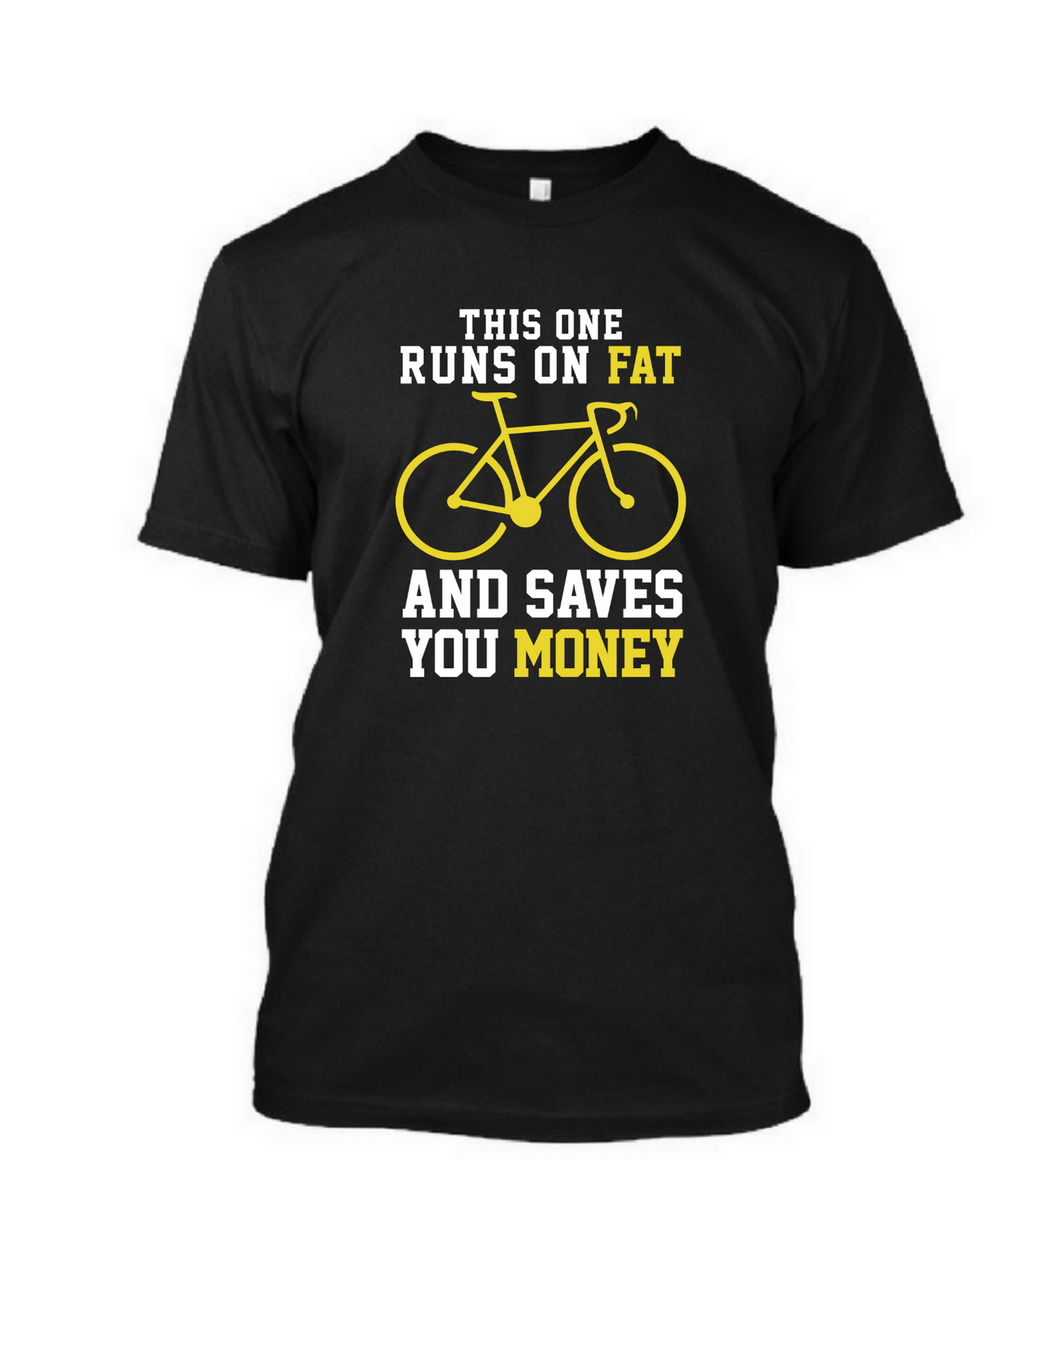 Runs on fat - Men's Half sleeve round neck T-Shirt